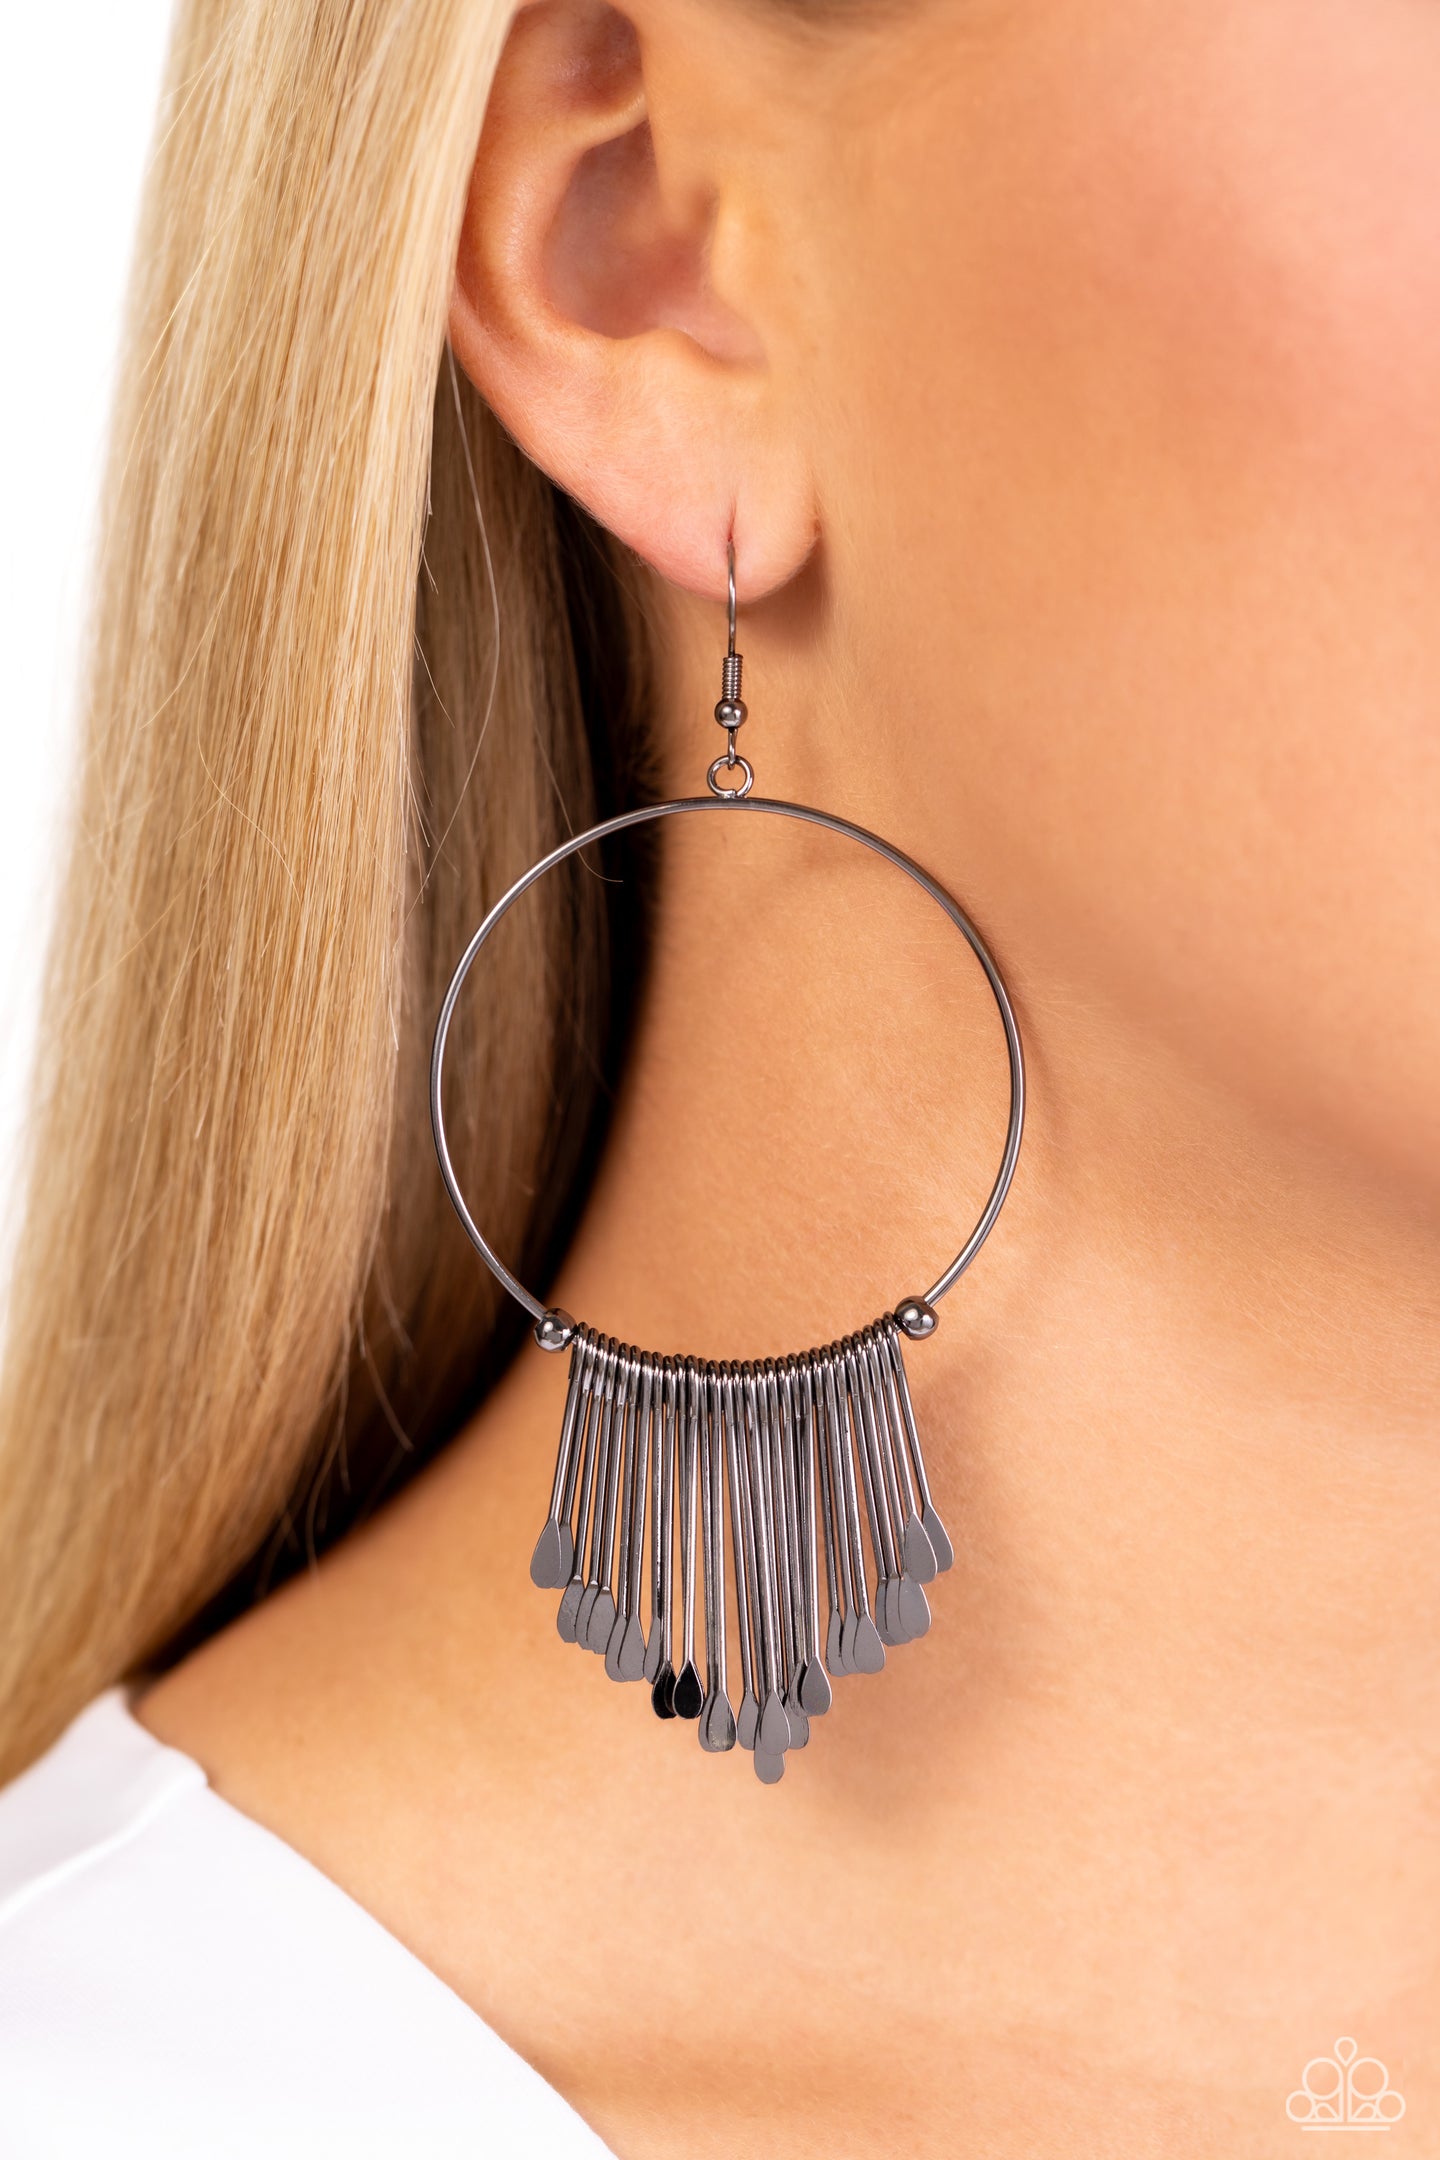 The Little Dipper - Black earrings